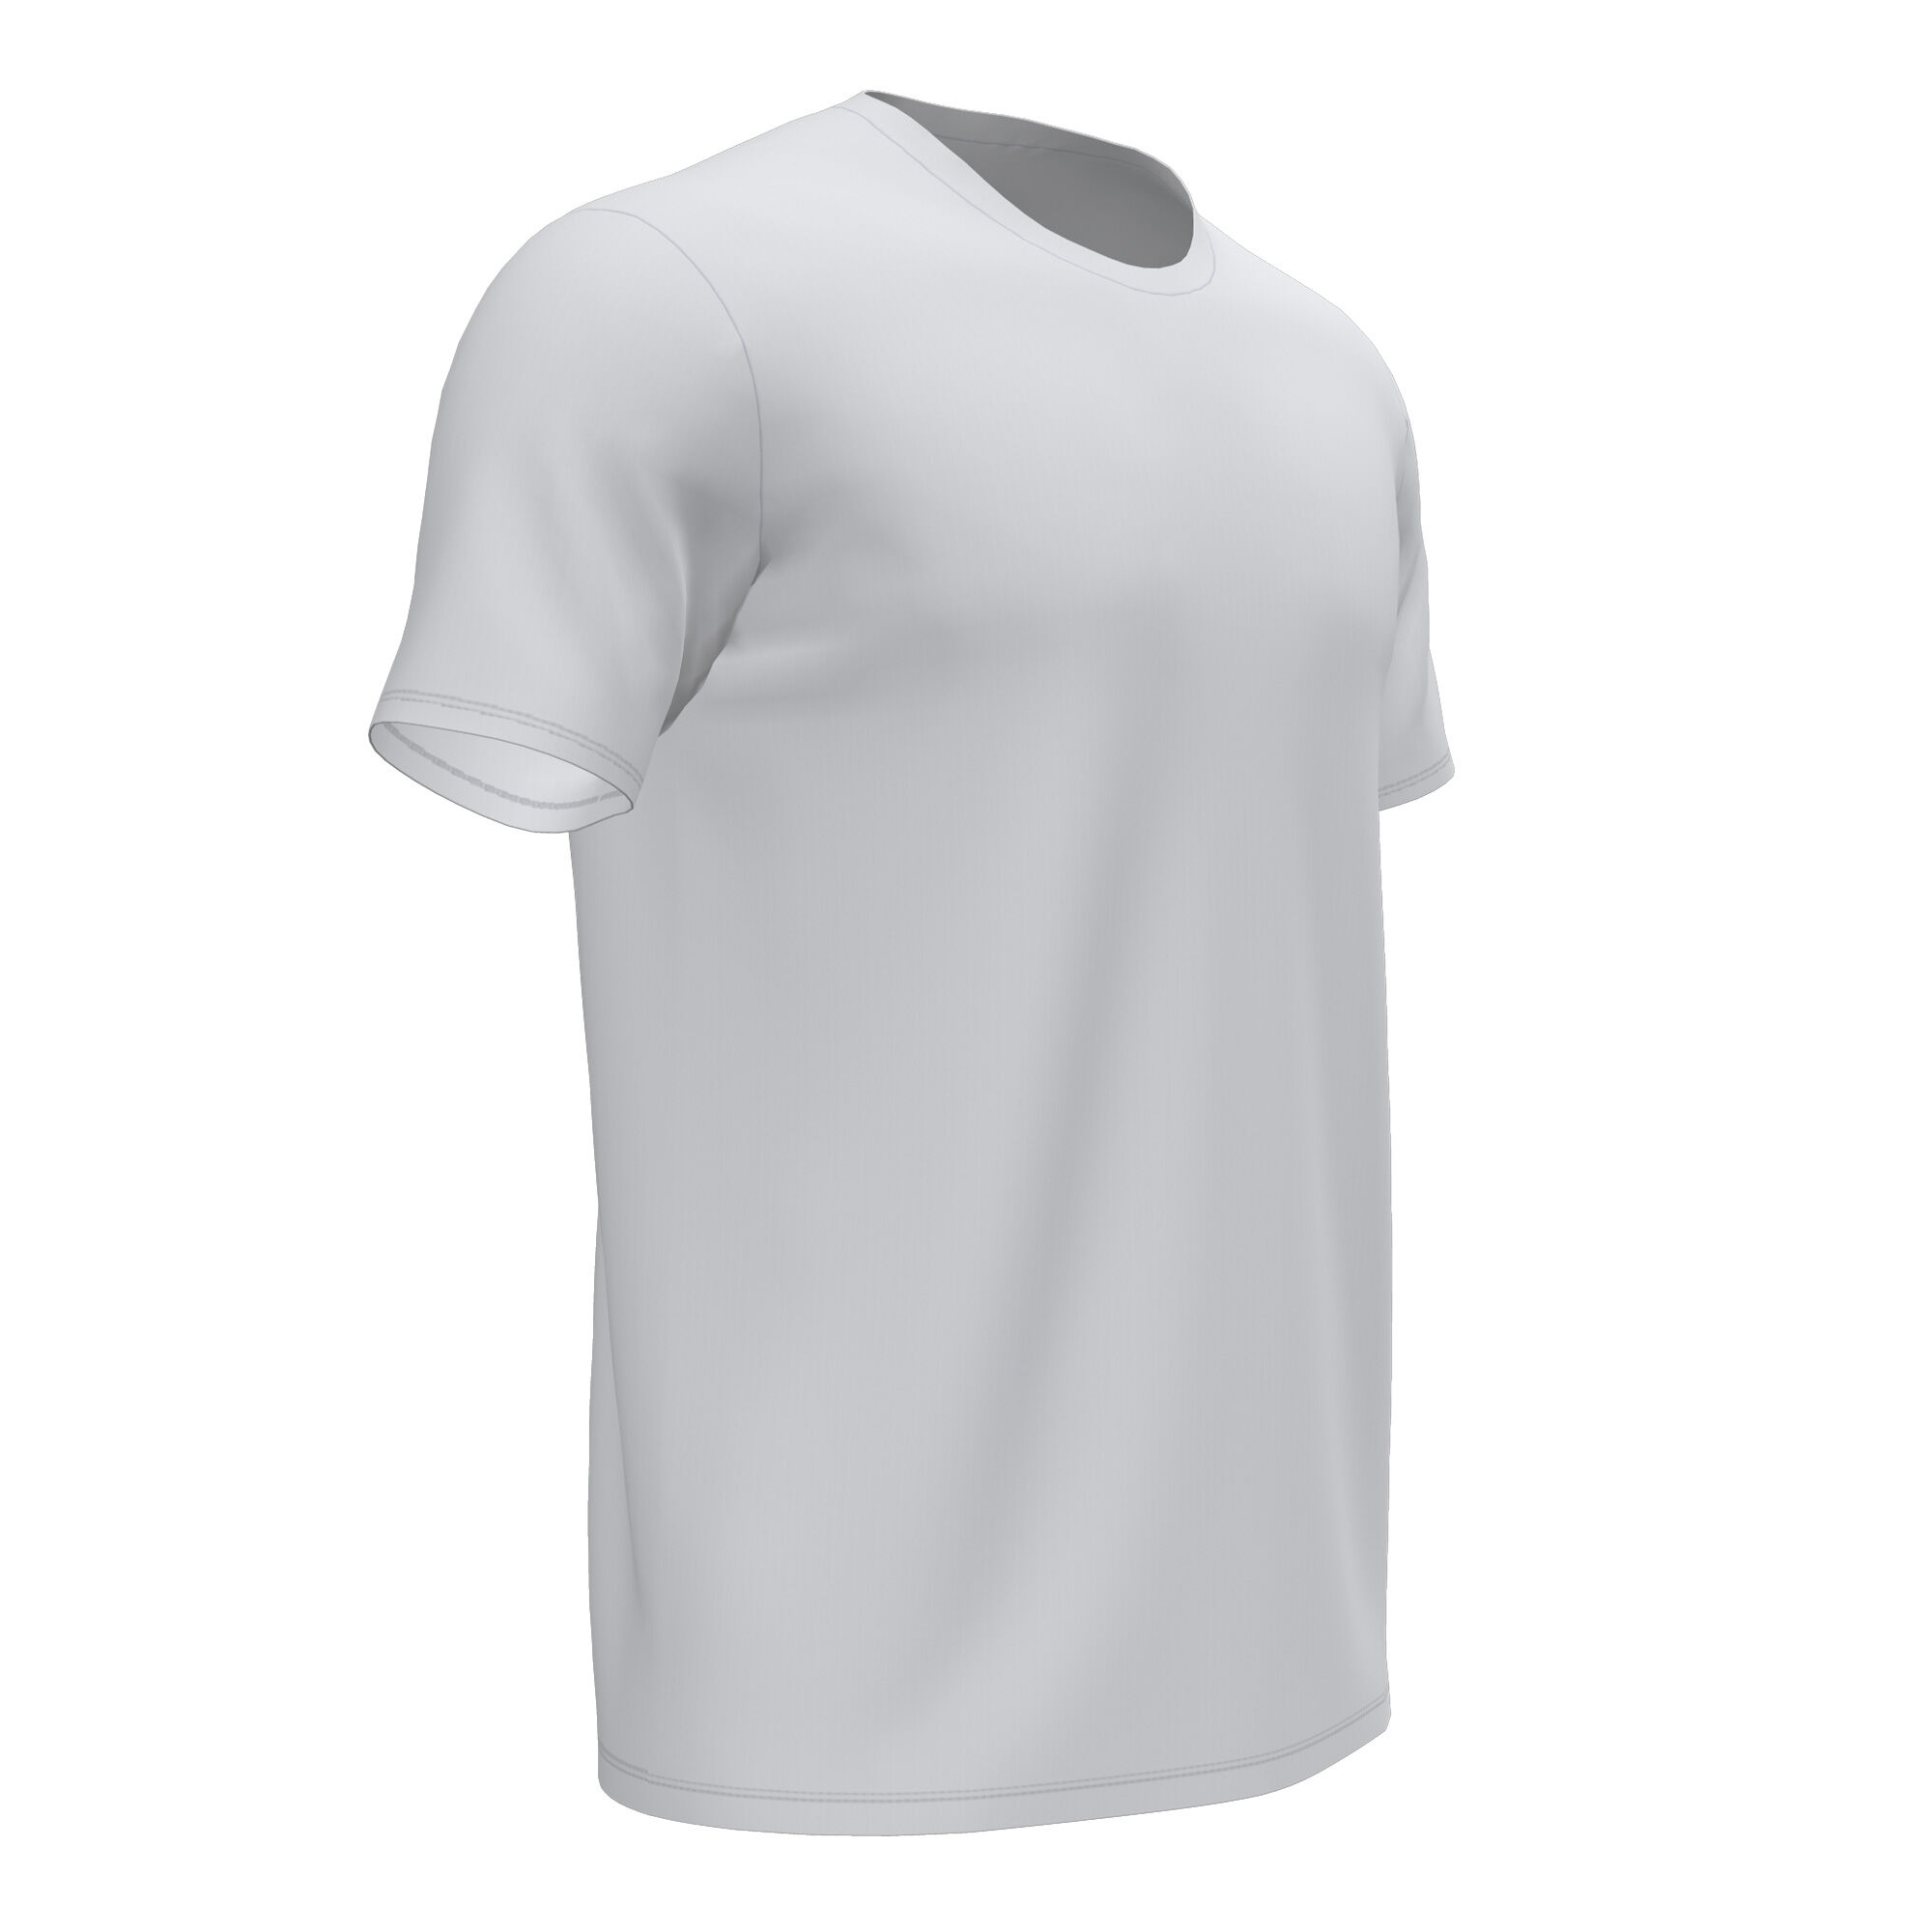 Camiseta Manga Corta Sydney Blanco | Camisetas y Polos Joma Hombre -  CARTASOHPERU